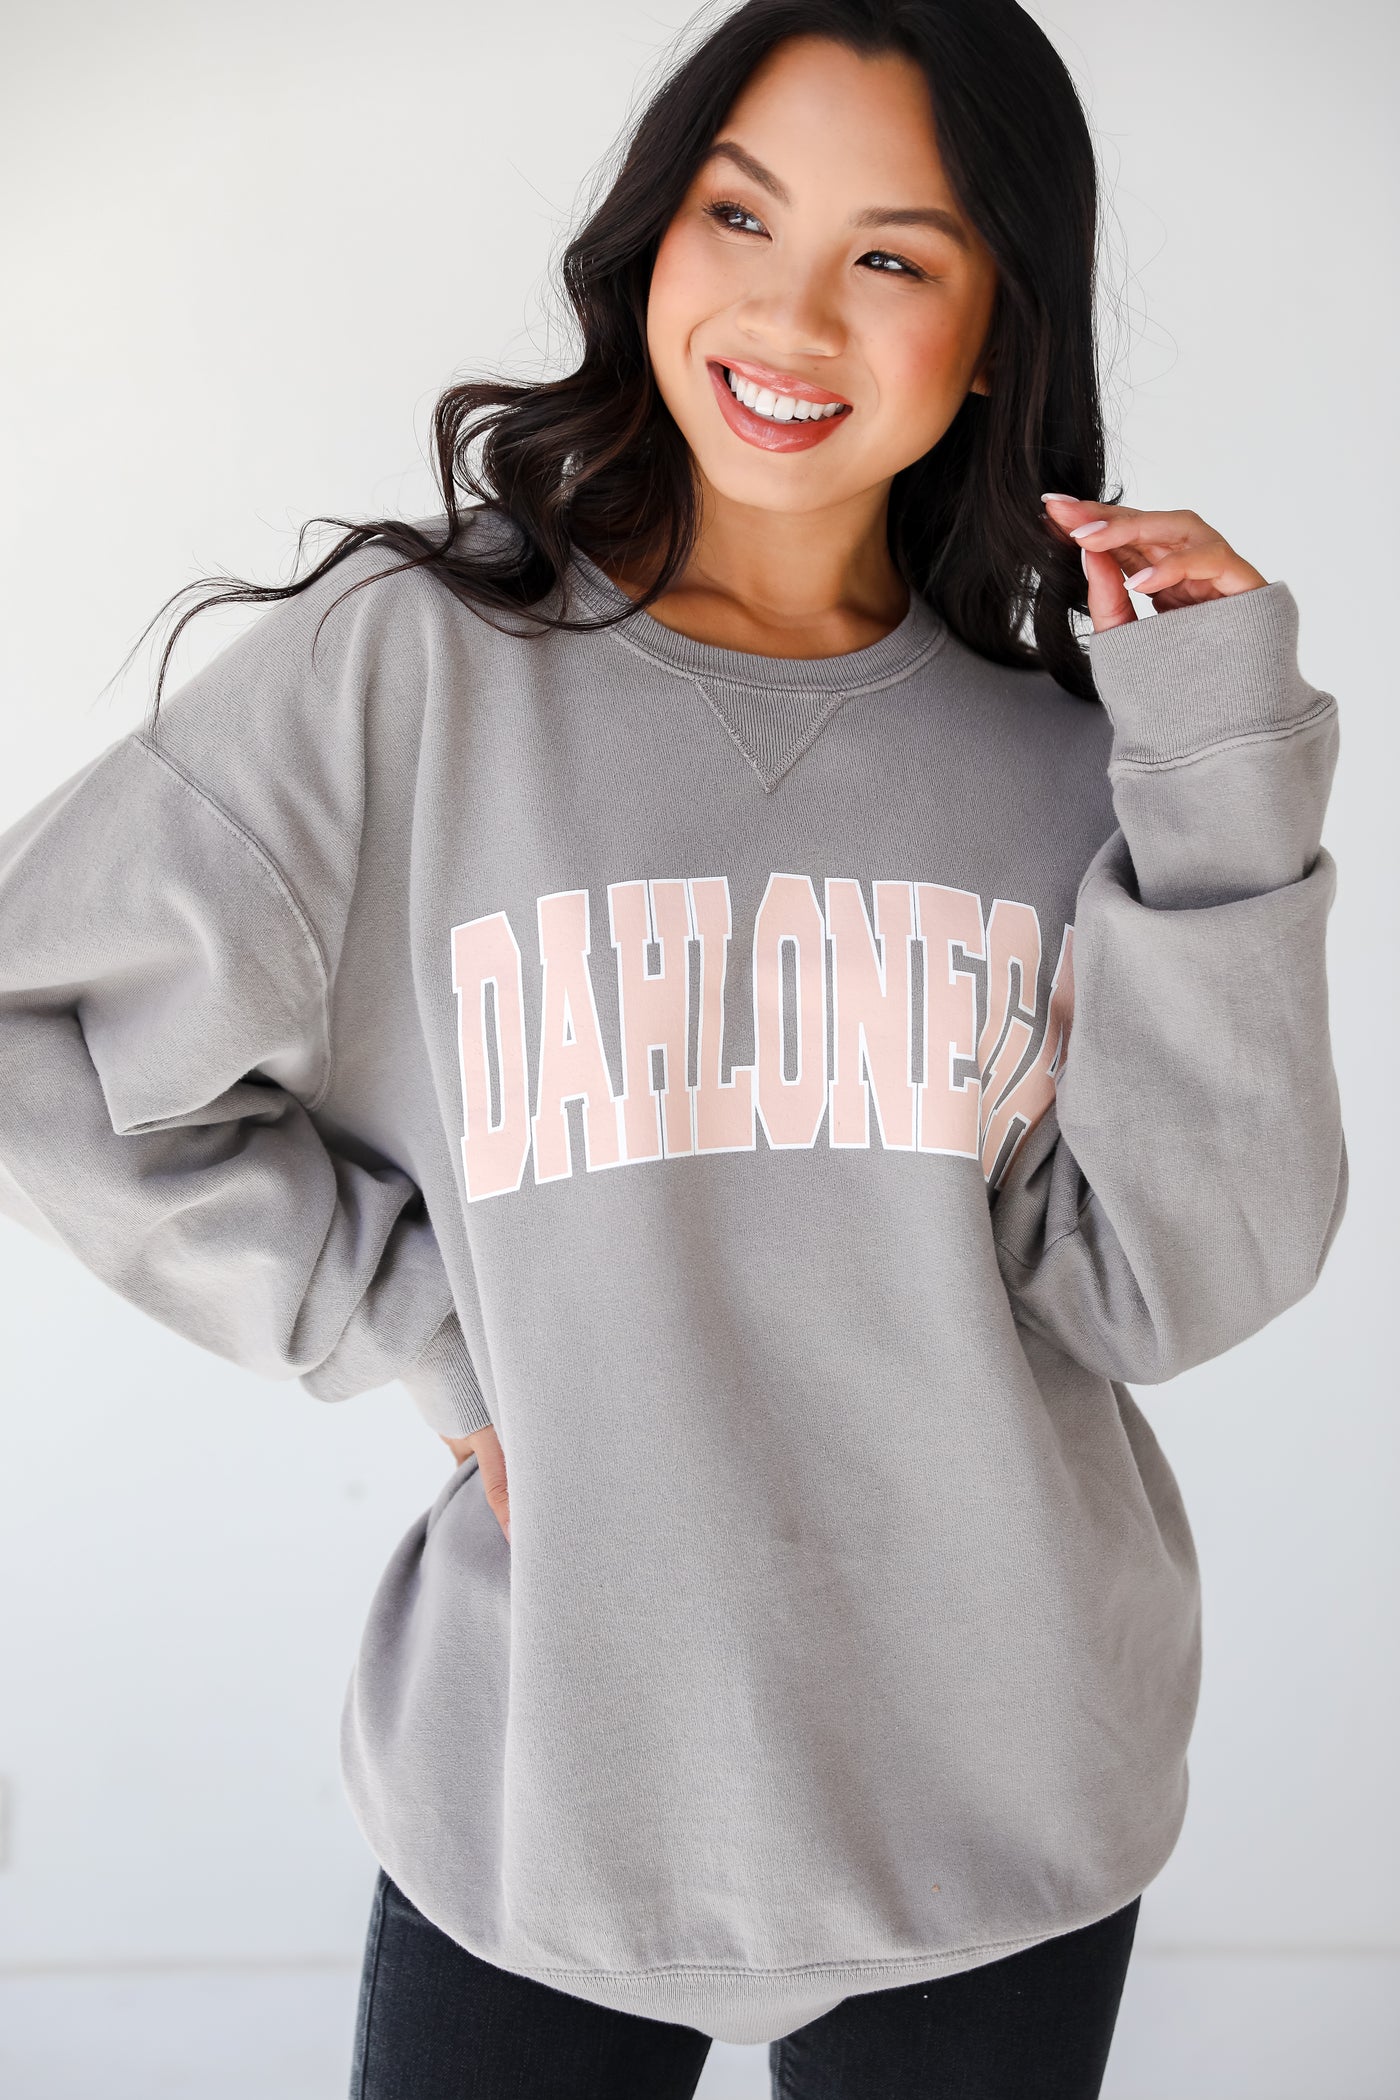 Grey Dahlonega Pullover. Graphic Sweatshirt. Oversized Comfy Sweatshirt. 